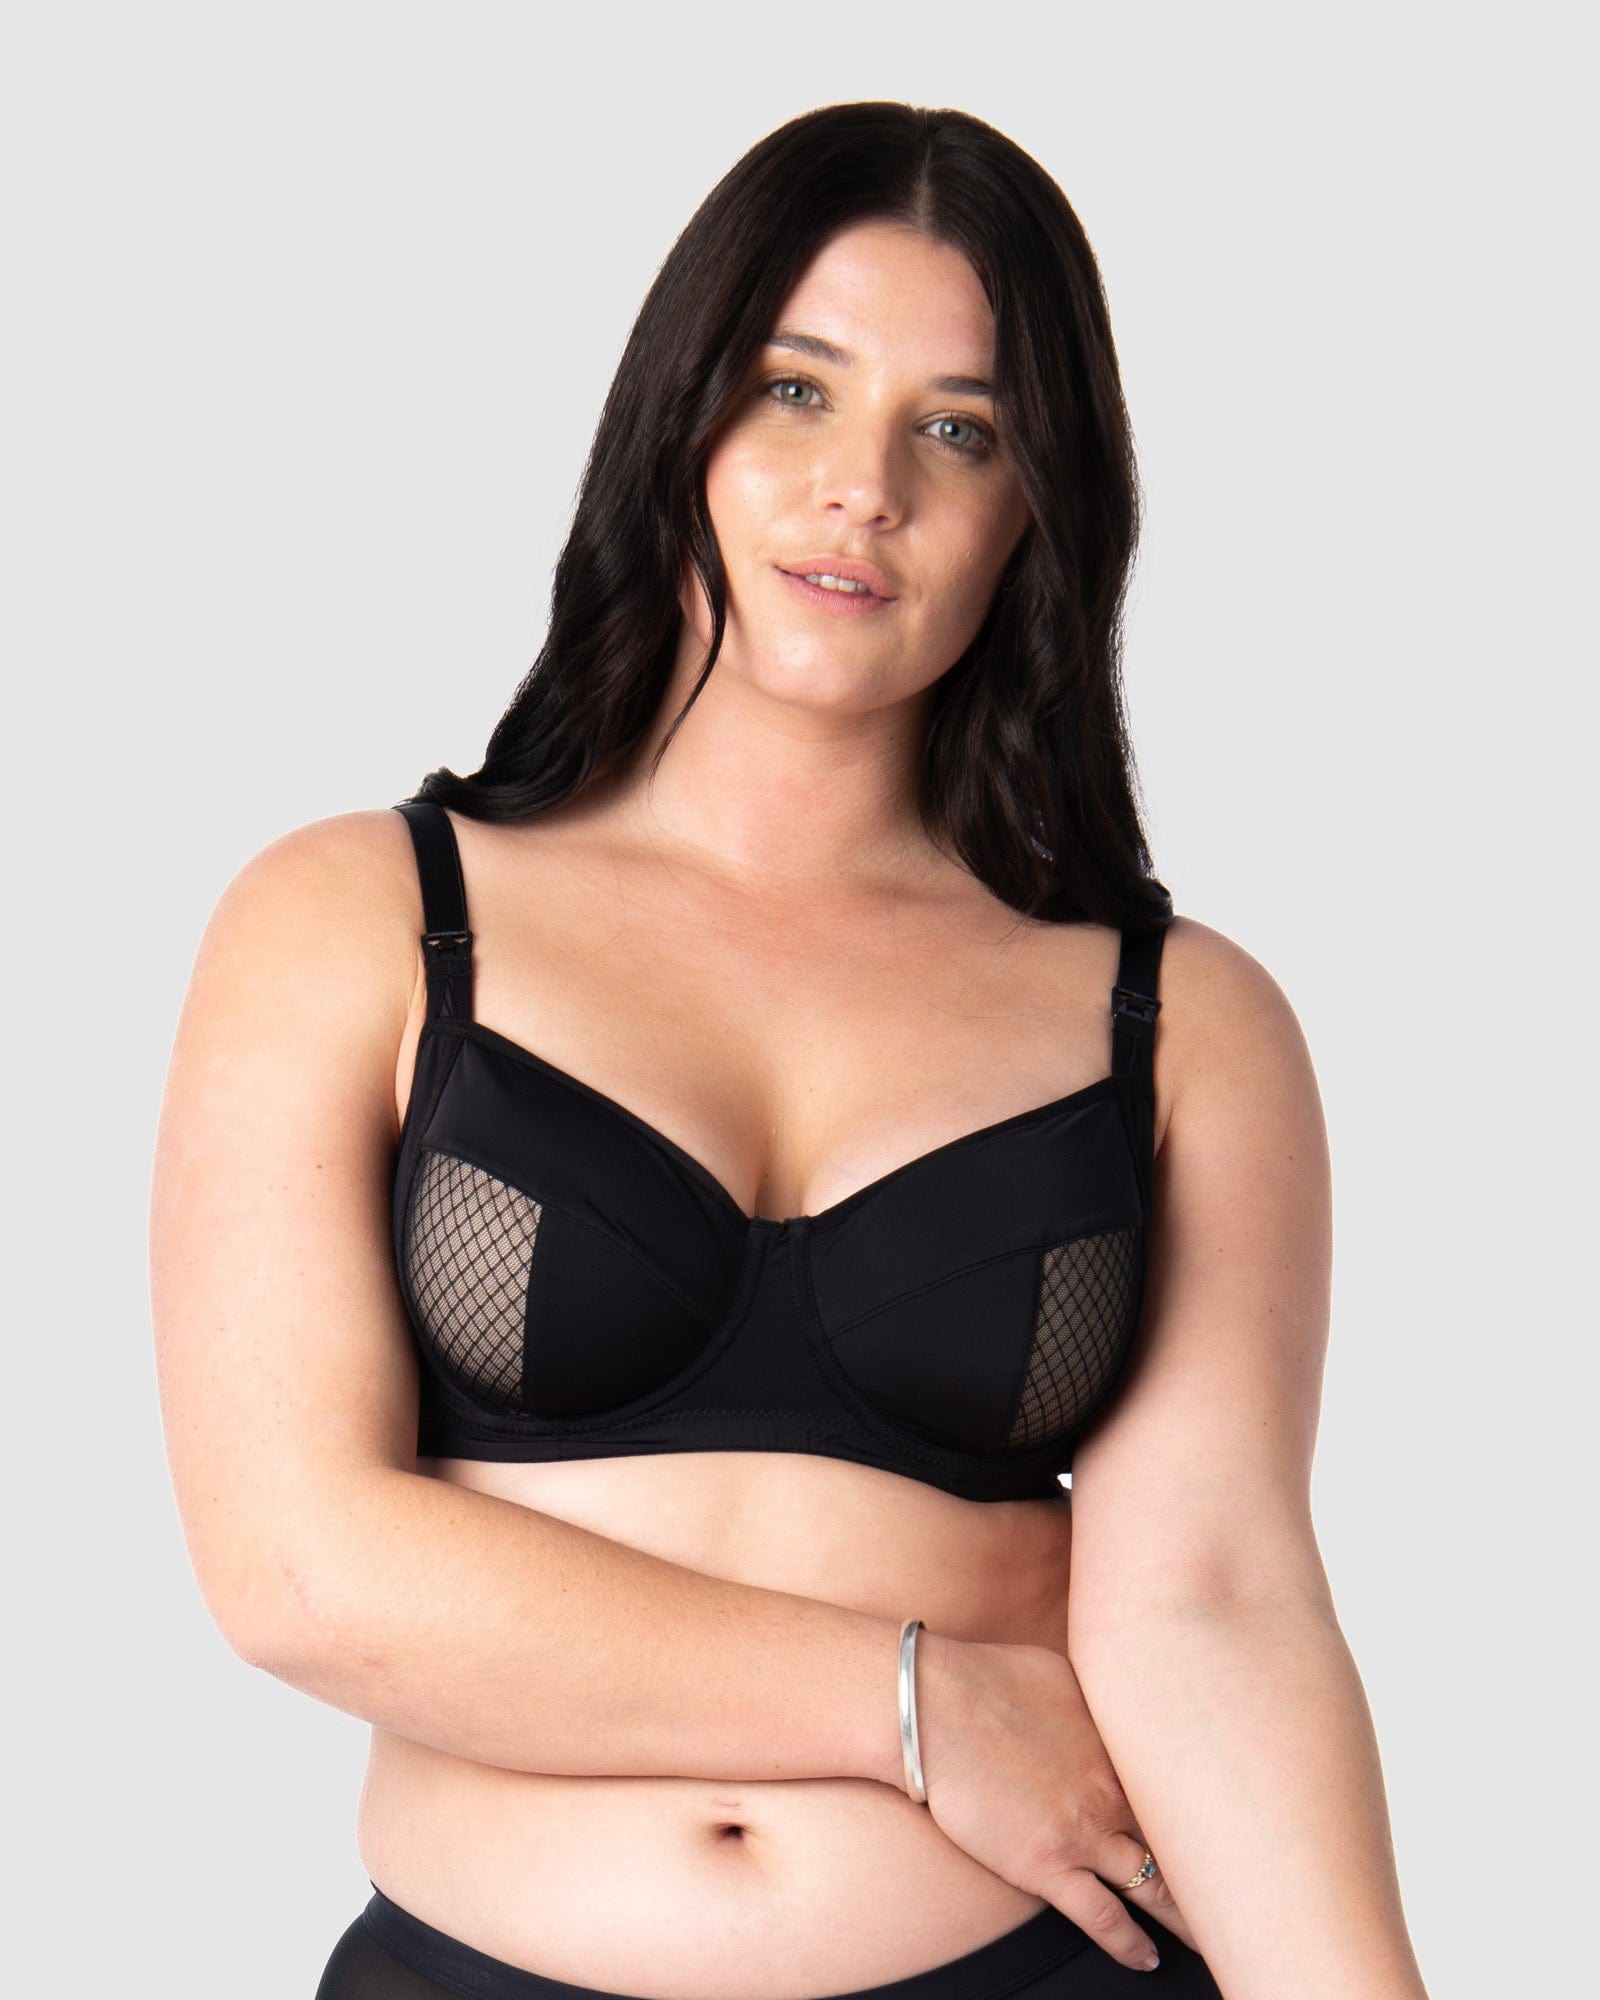 Wholesale 36dd bras For Supportive Underwear 